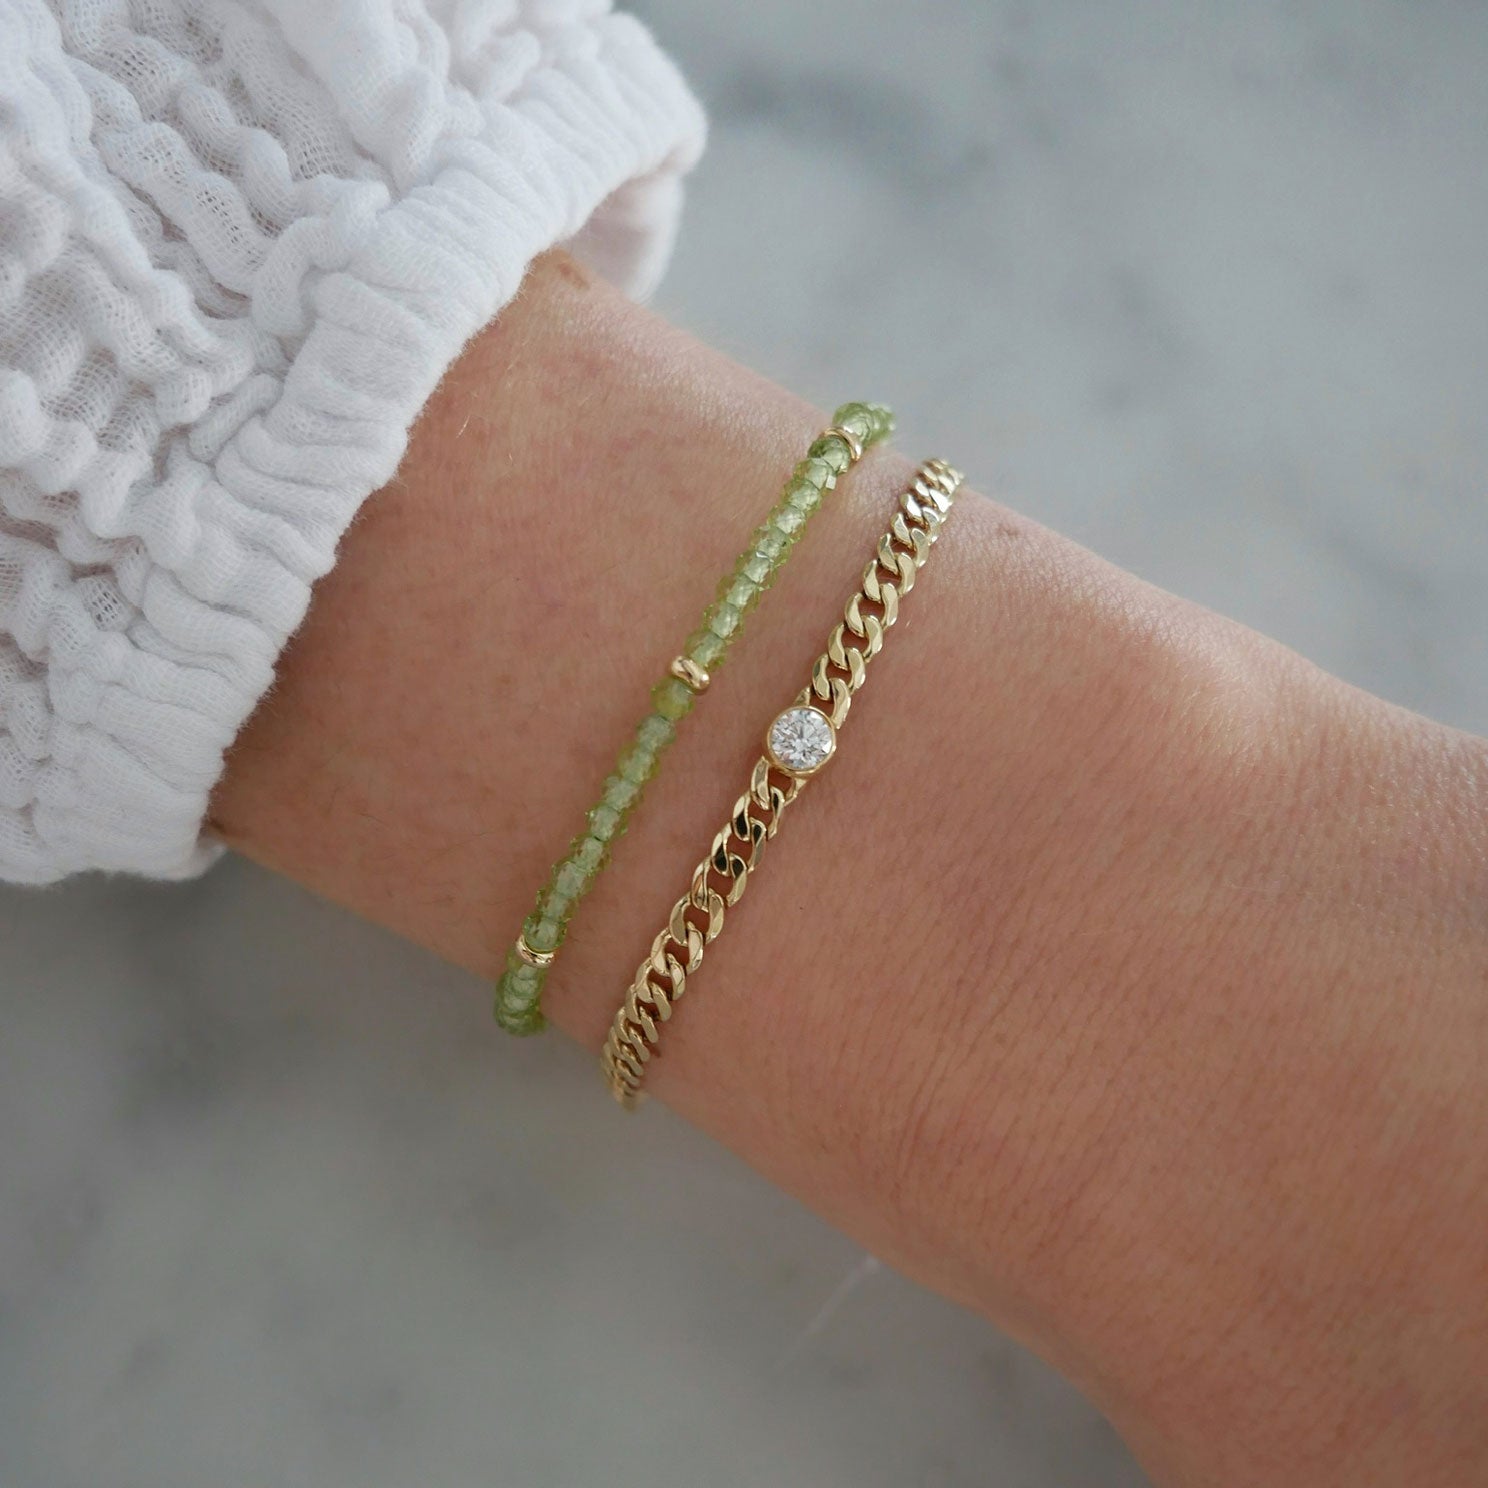 Birthstone Bead Bracelet In Peridot styled on wrist of model wearing diamond curb chain bracelet and white sleeve